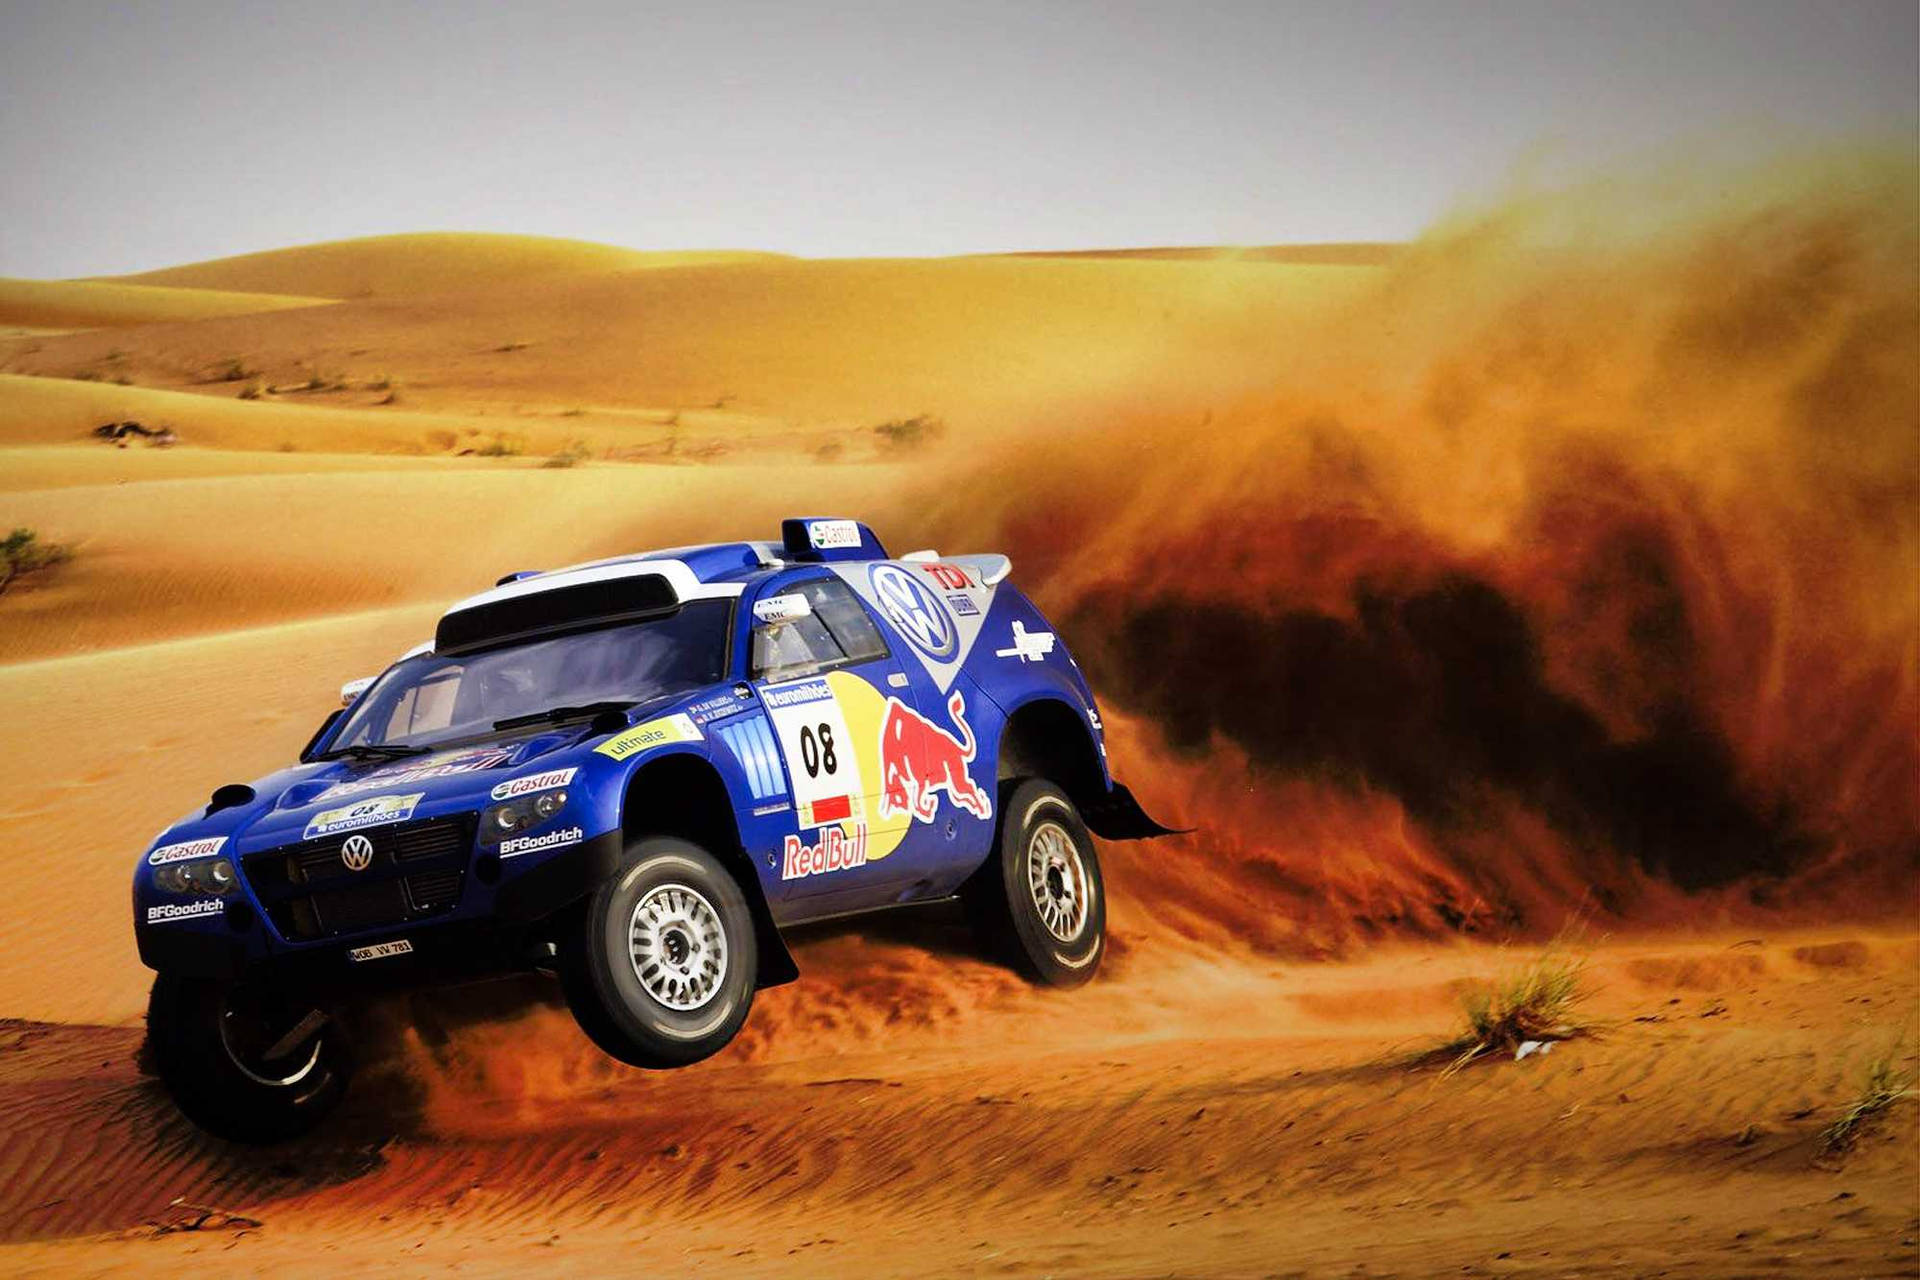 2008 Volkswagen Touareg Dakar Rally Background